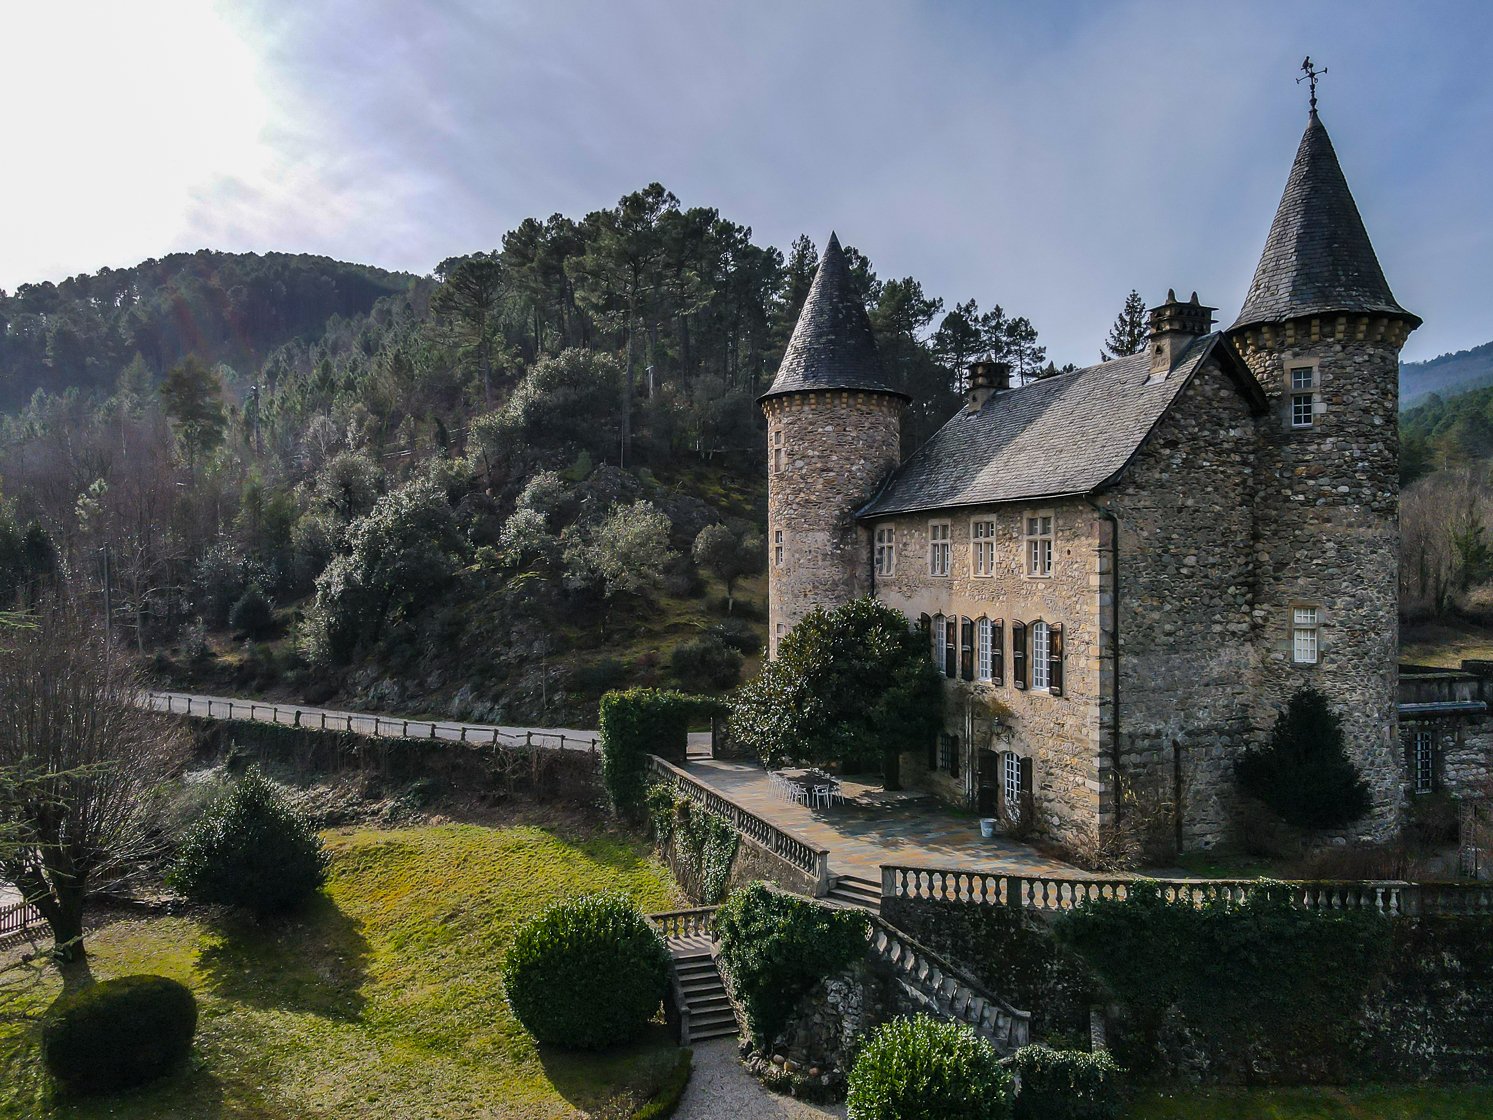 Francis+York+Fairytale 16th Century French Chateau in the Cevennes National Park 00019.jpg